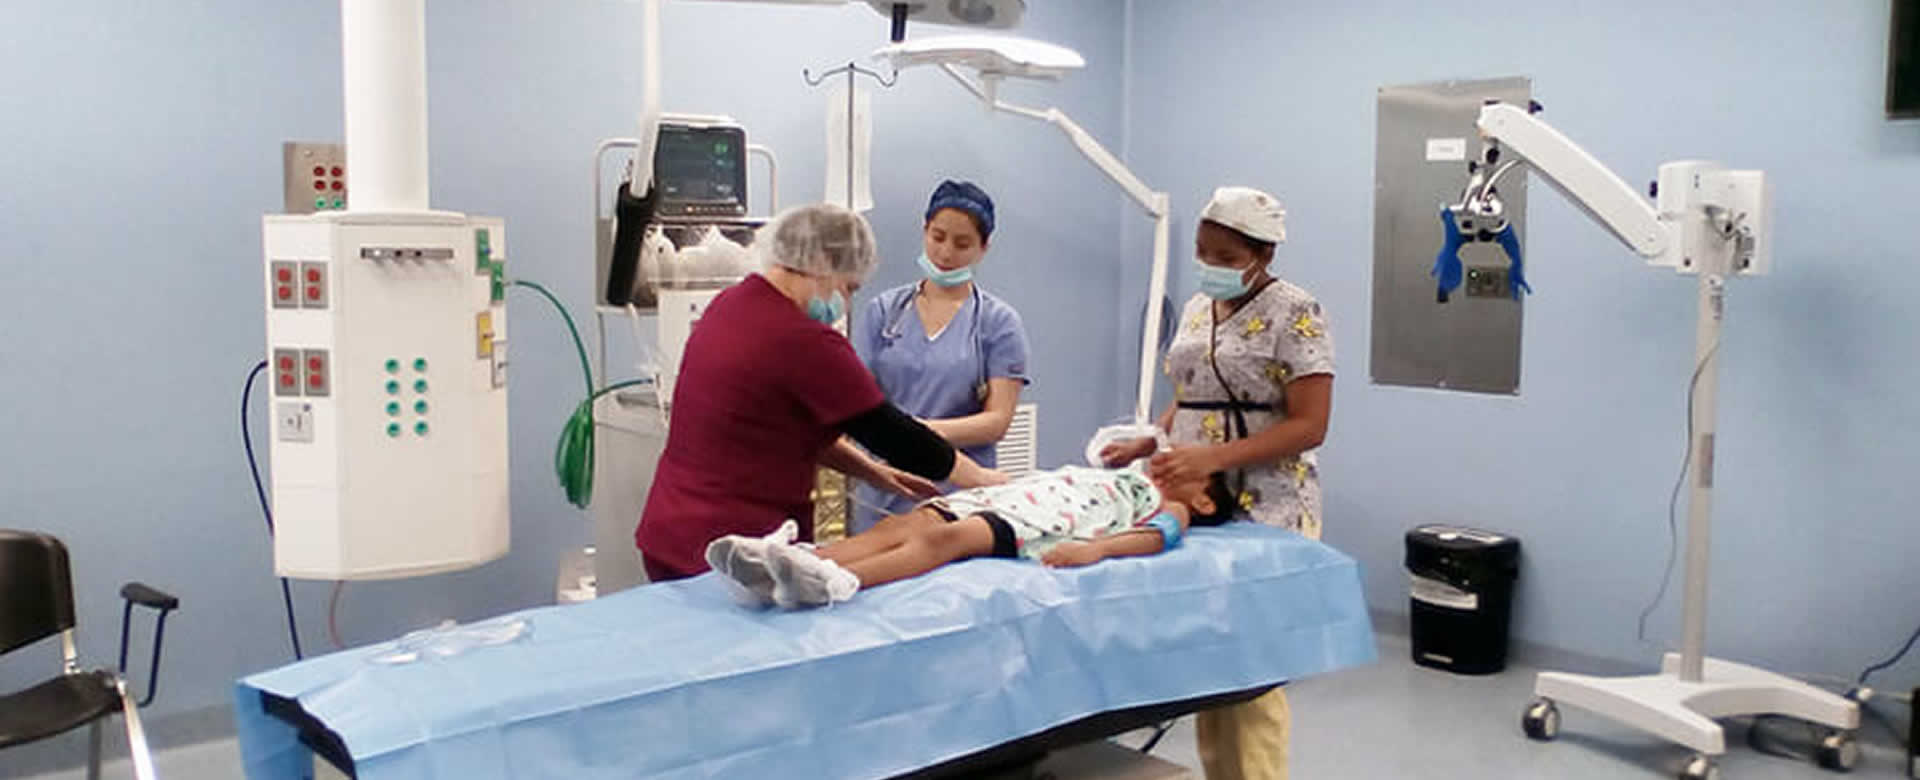 Hospital Vélez Paiz en jornada quirurgica de labio leporino y paladar hendido